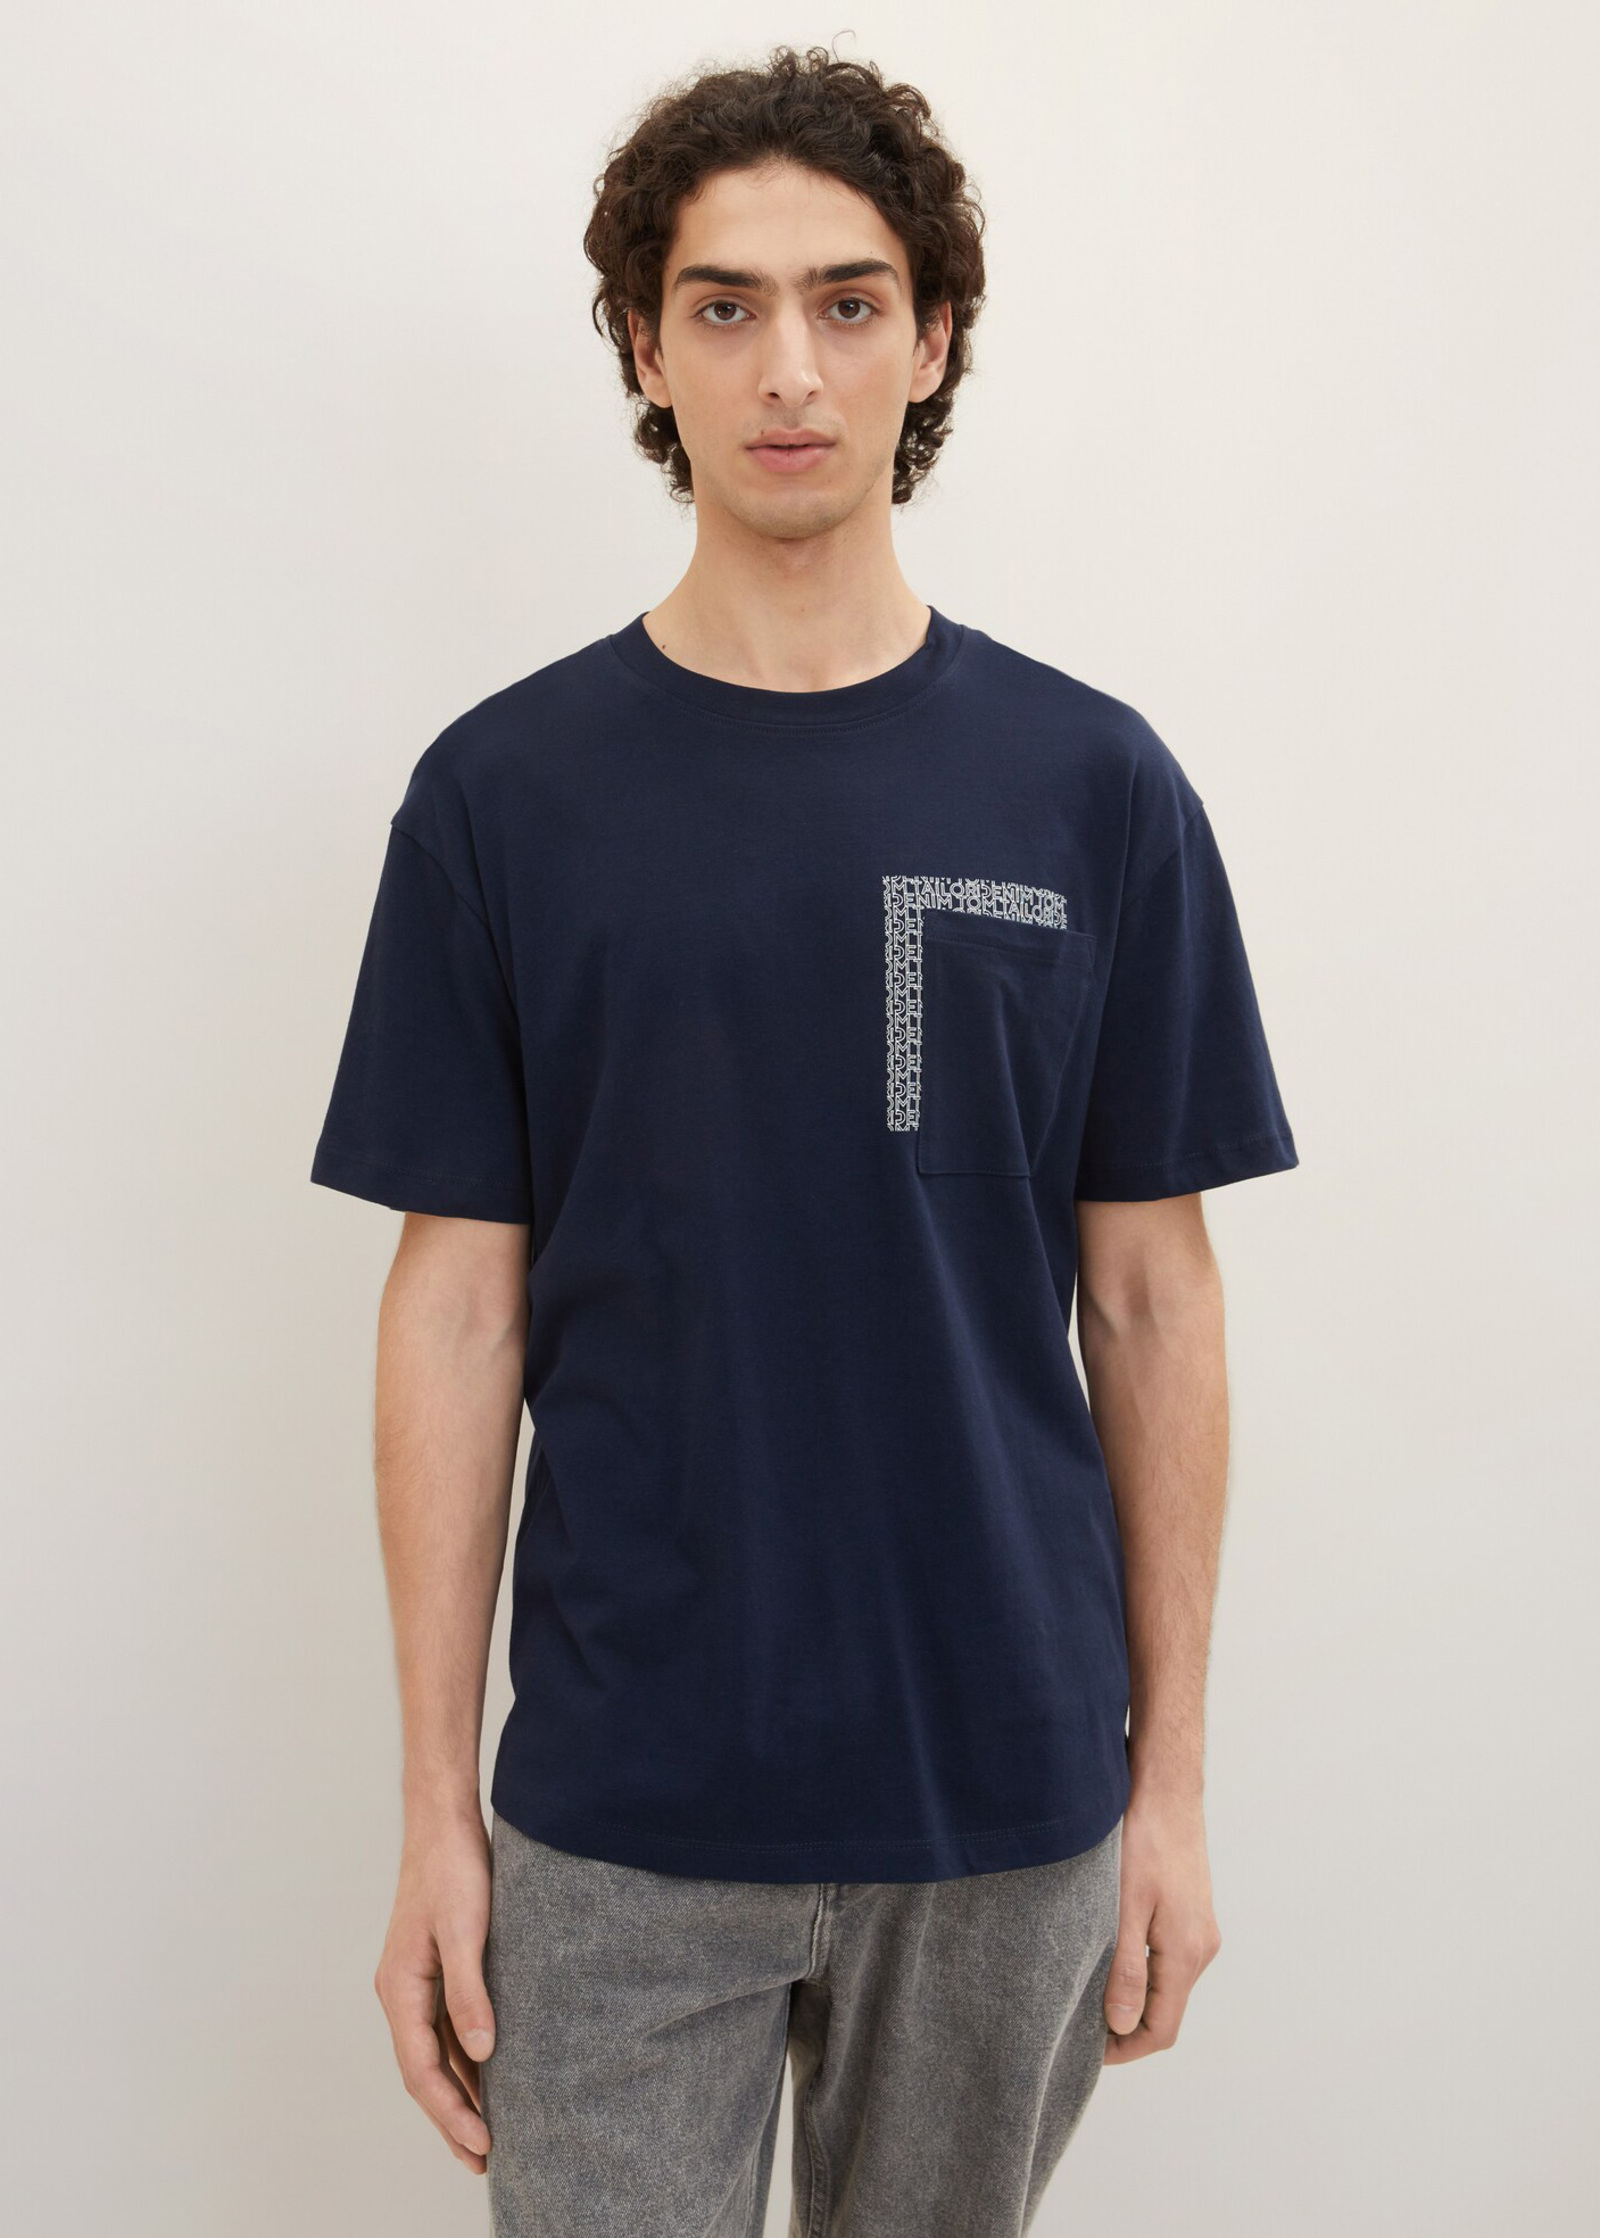 Tom Tailor® T-shirt Sign - Sky Captain Blue Size XL